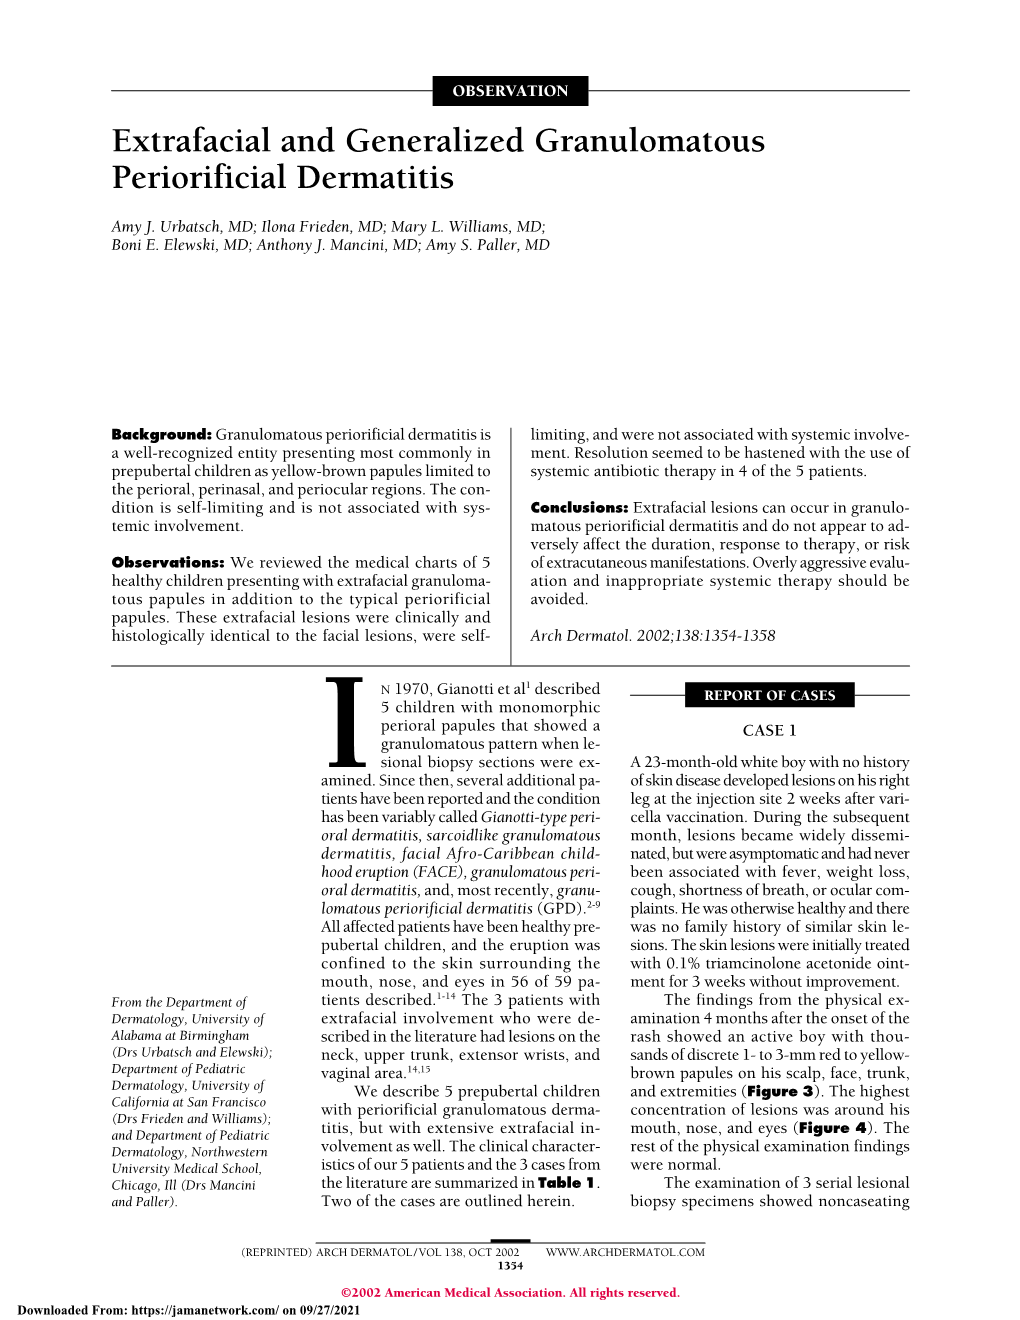 Extrafacial and Generalized Granulomatous Periorificial Dermatitis